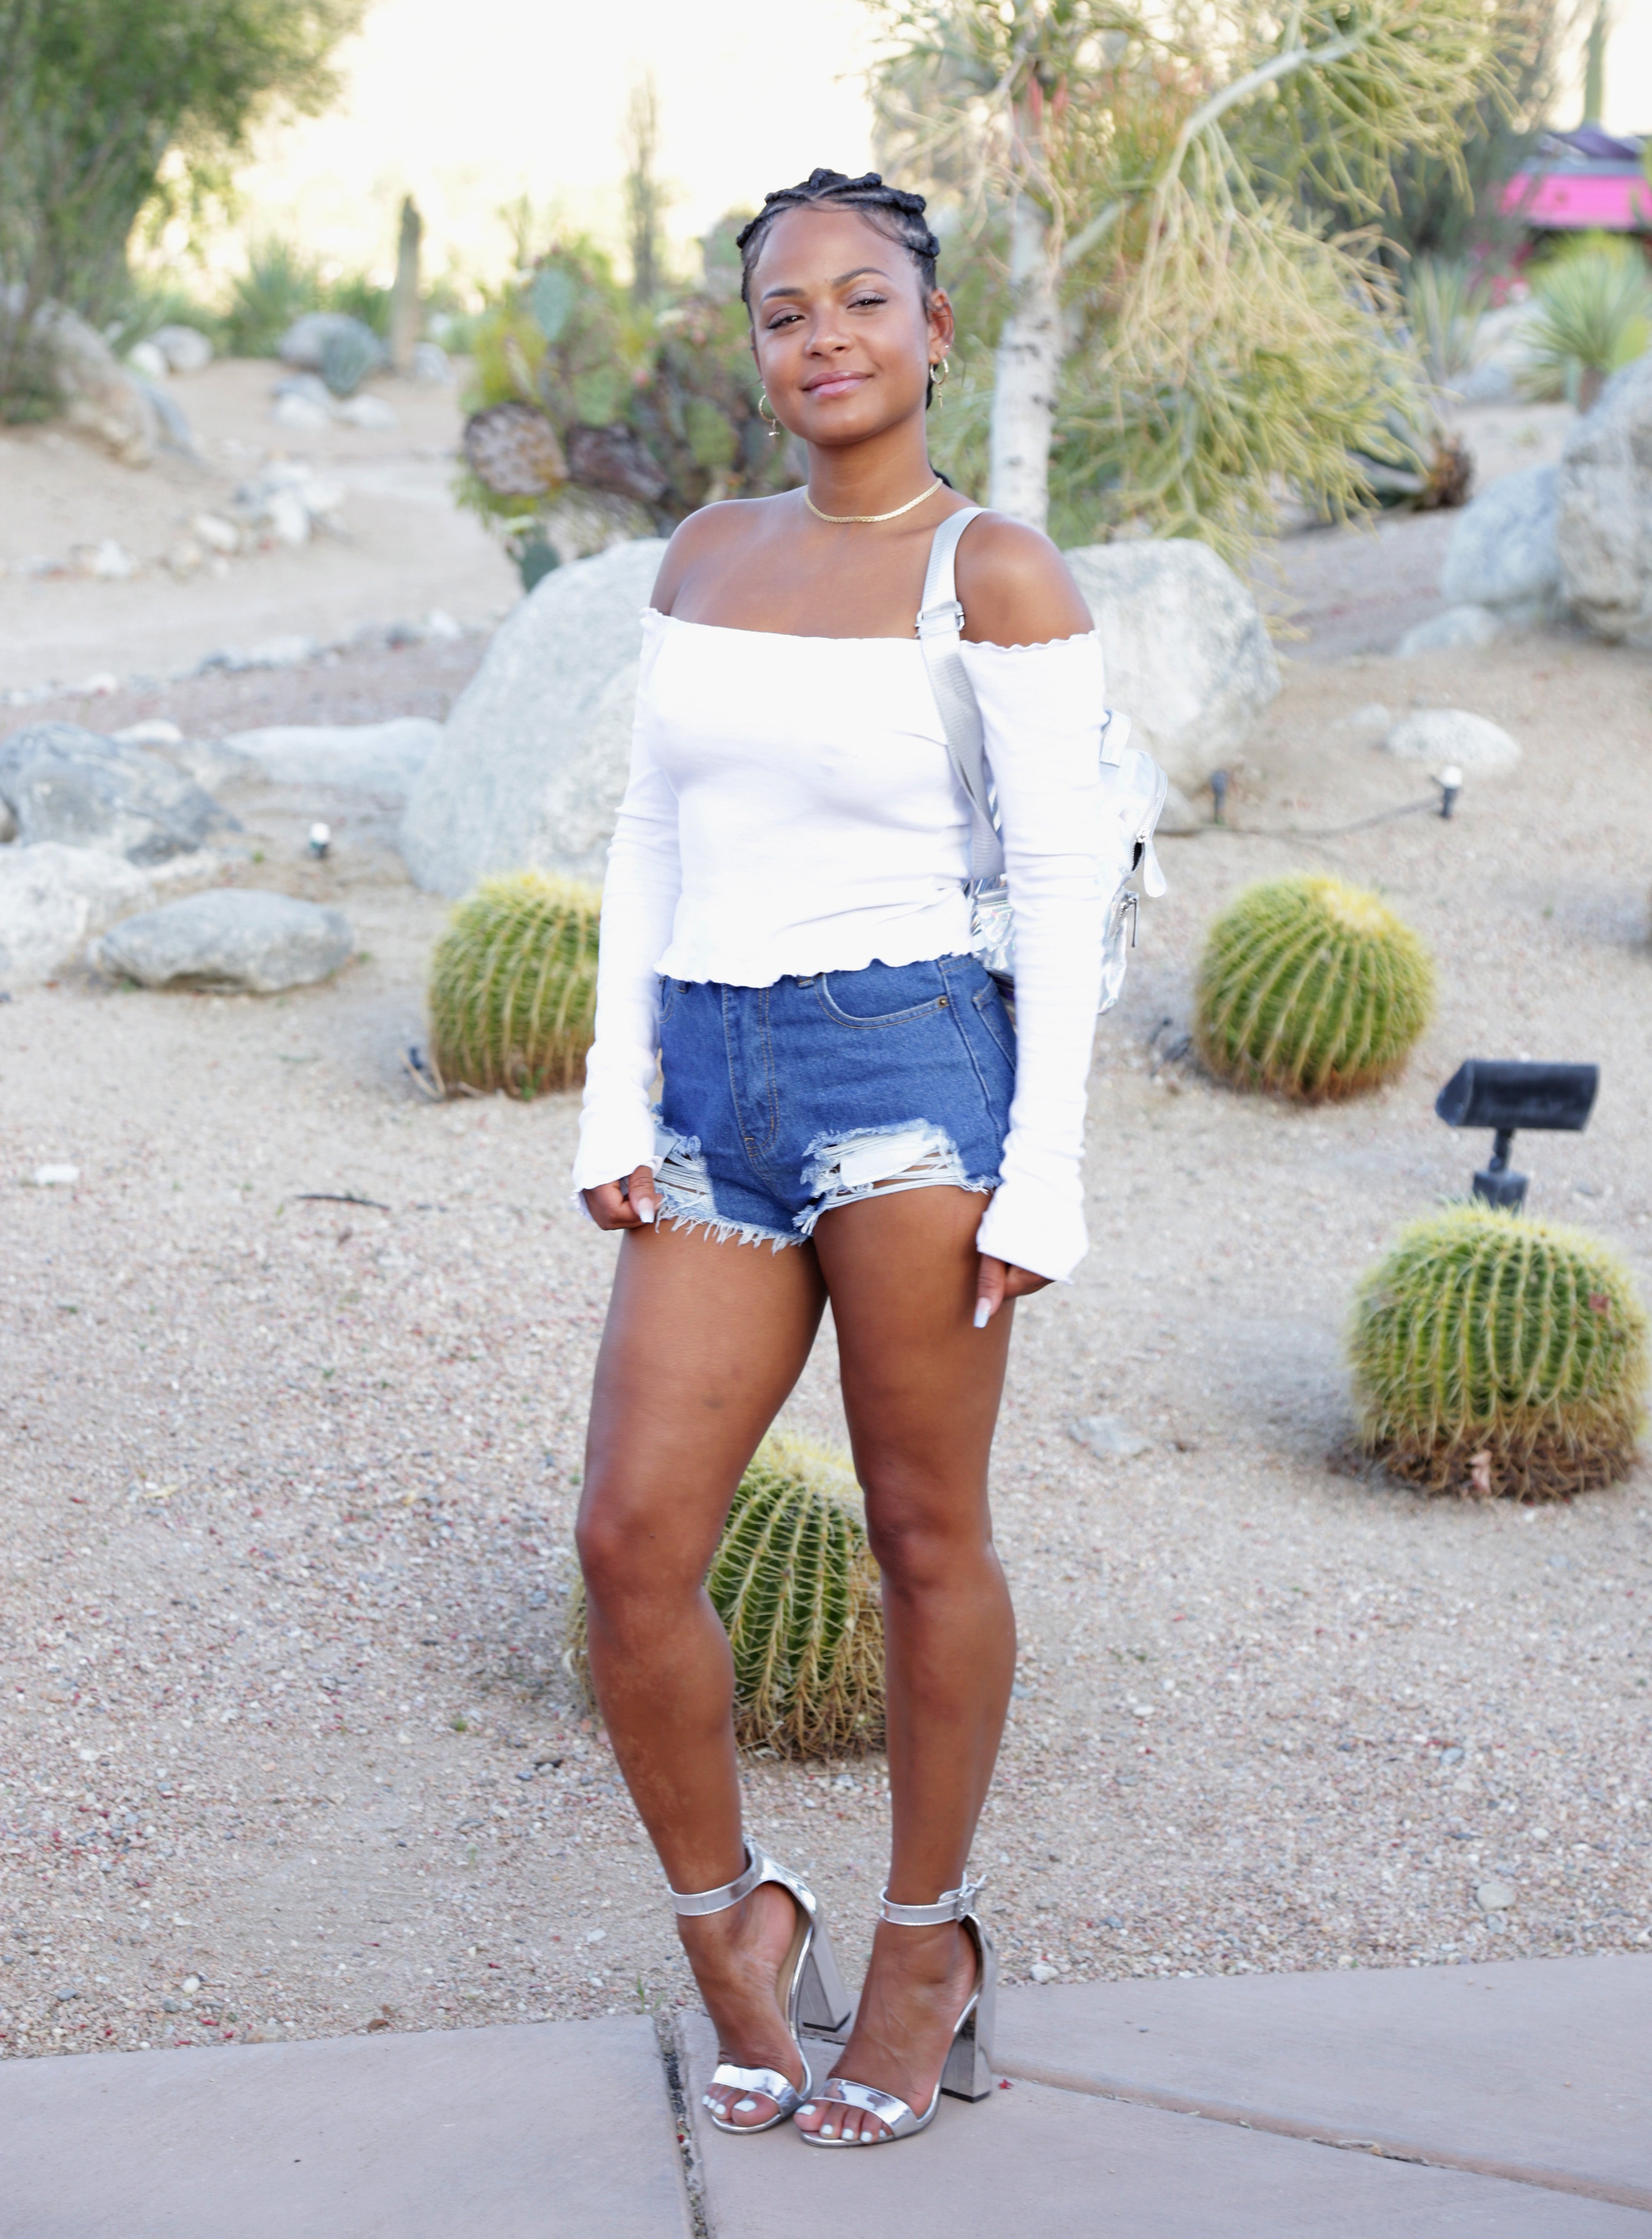 Carefree Black Girls’ Style Reigned Supreme at Coachella 2017